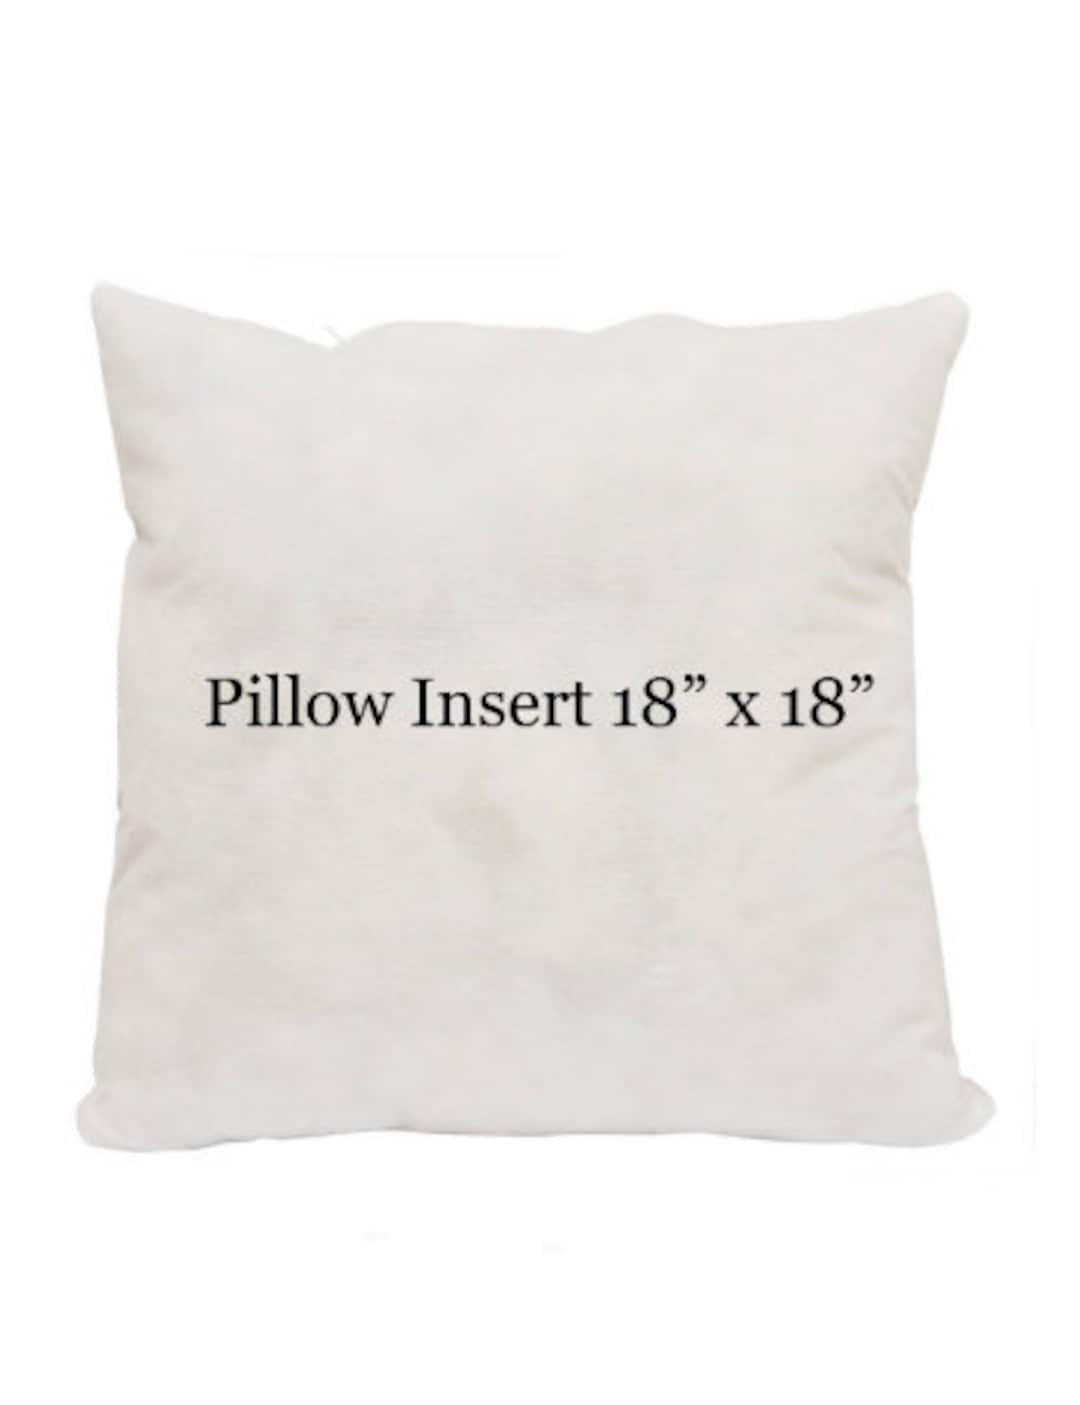 UNIKOME Outdoor Waterproof Decorative Pillows Set of 2, 18 x 18